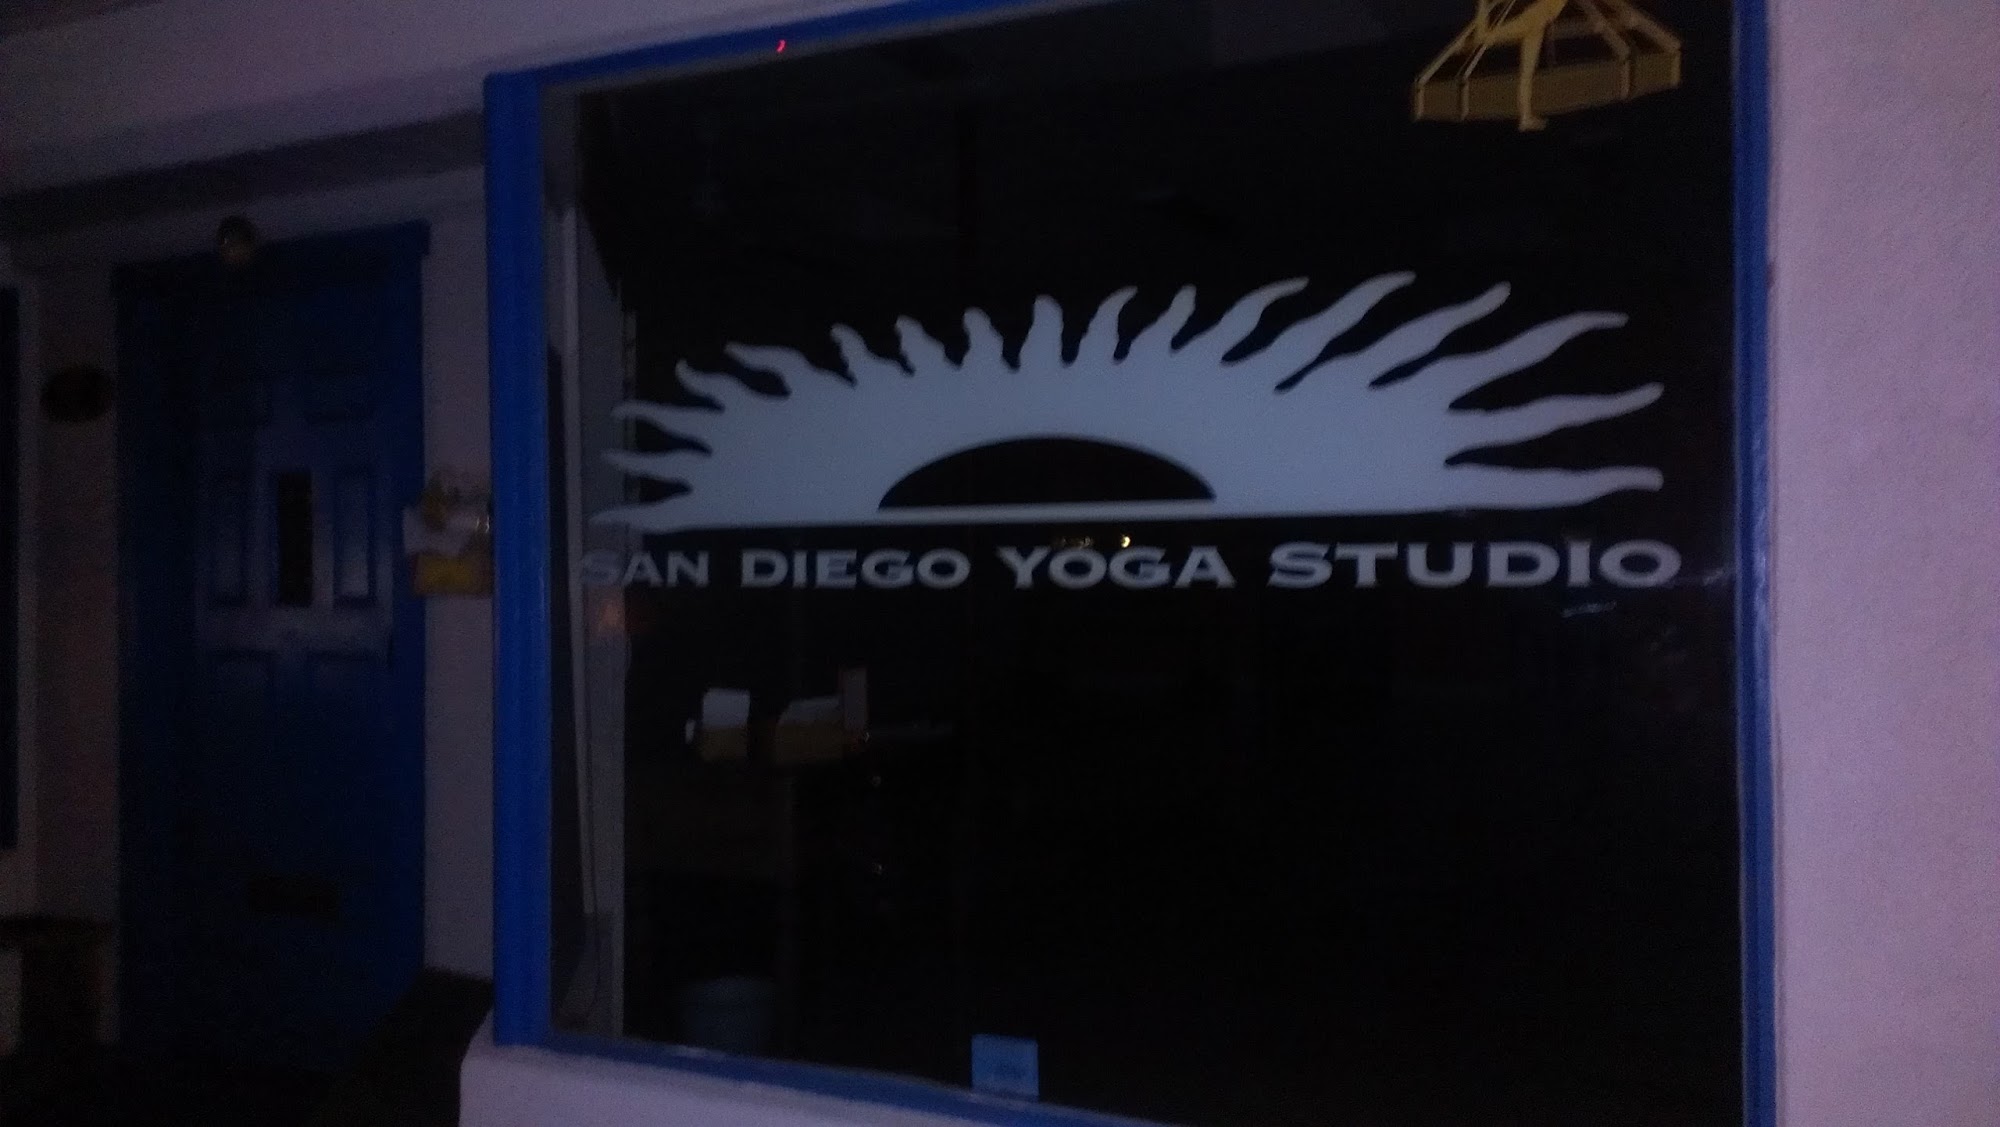 San Diego Yoga Studio